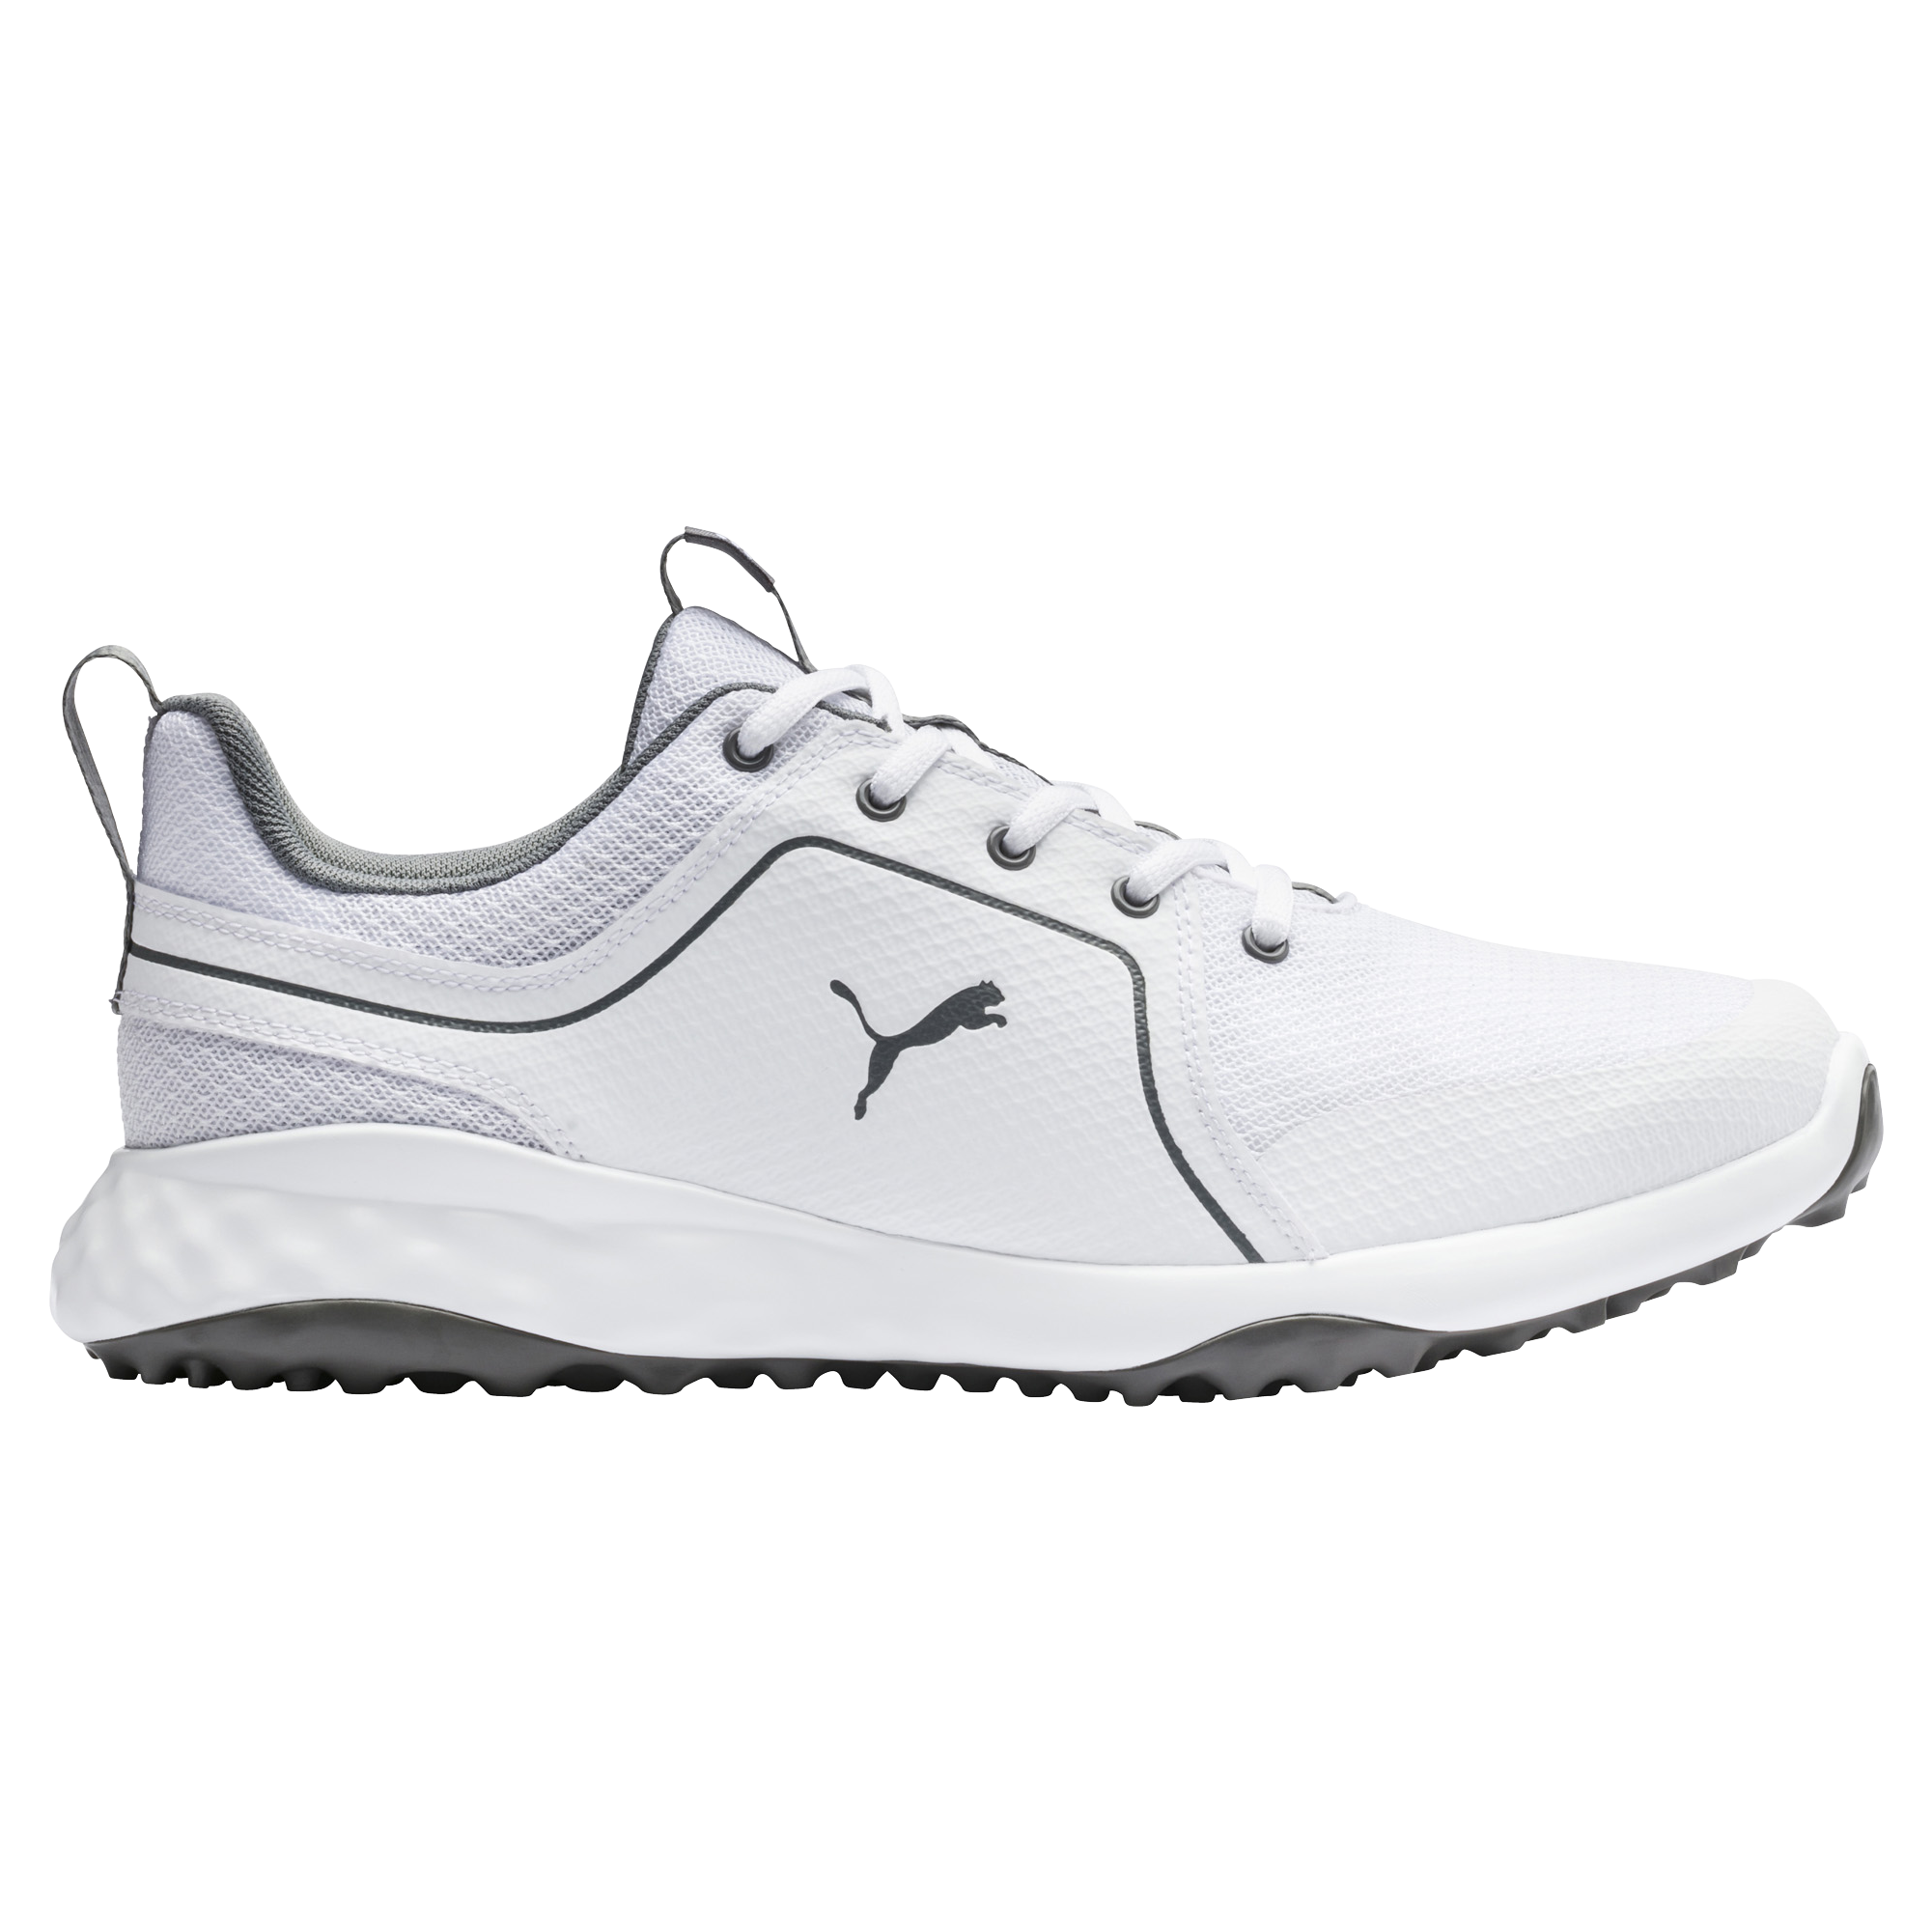 Golf Shoes | FootJoy, Adidas, ECCO 